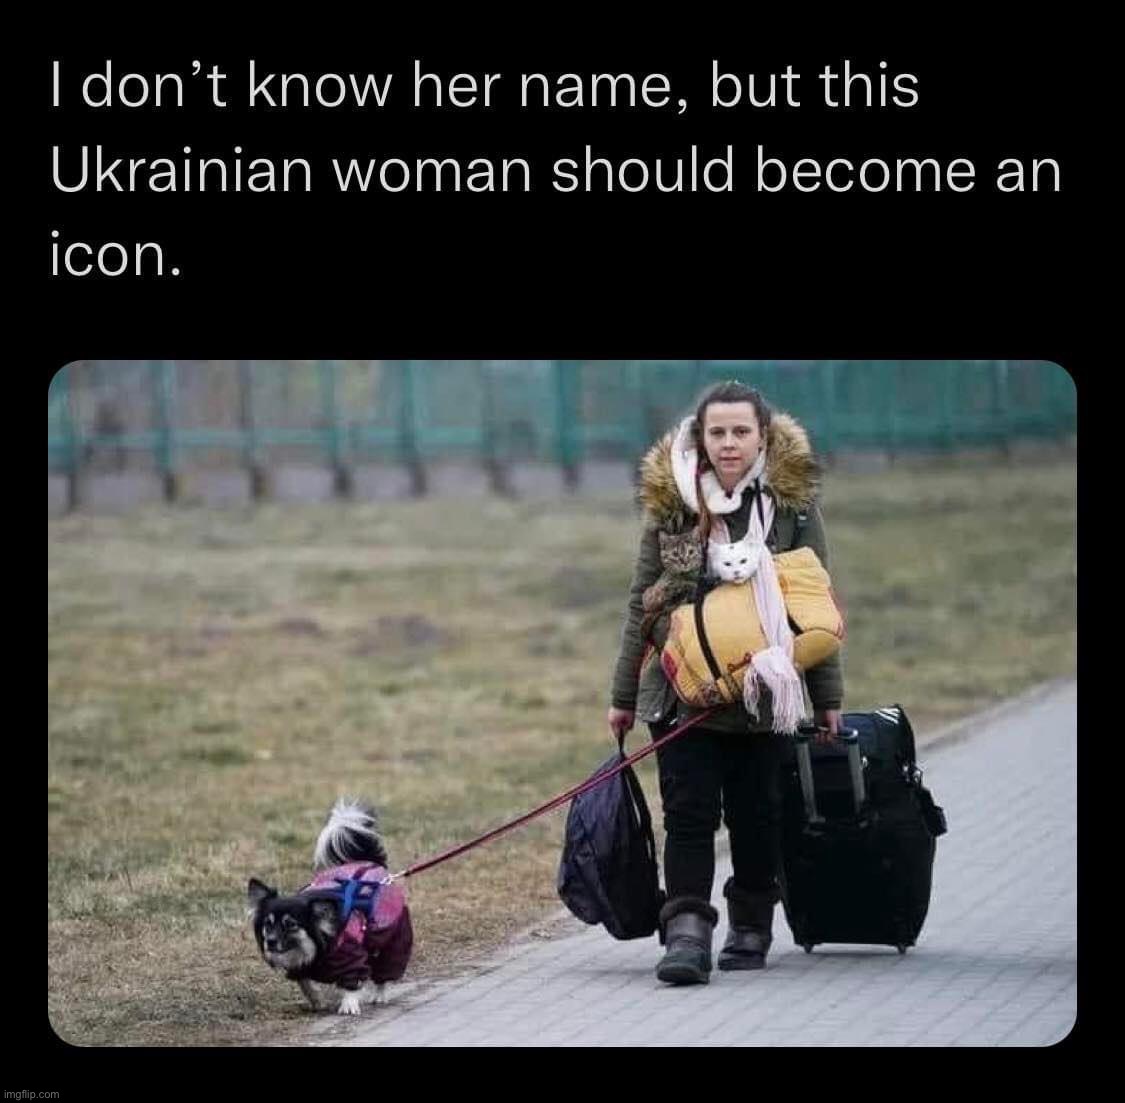 Icon | image tagged in ukrainian woman icon,ukraine,ukrainian lives matter,ukrainian,refugee,icon | made w/ Imgflip meme maker